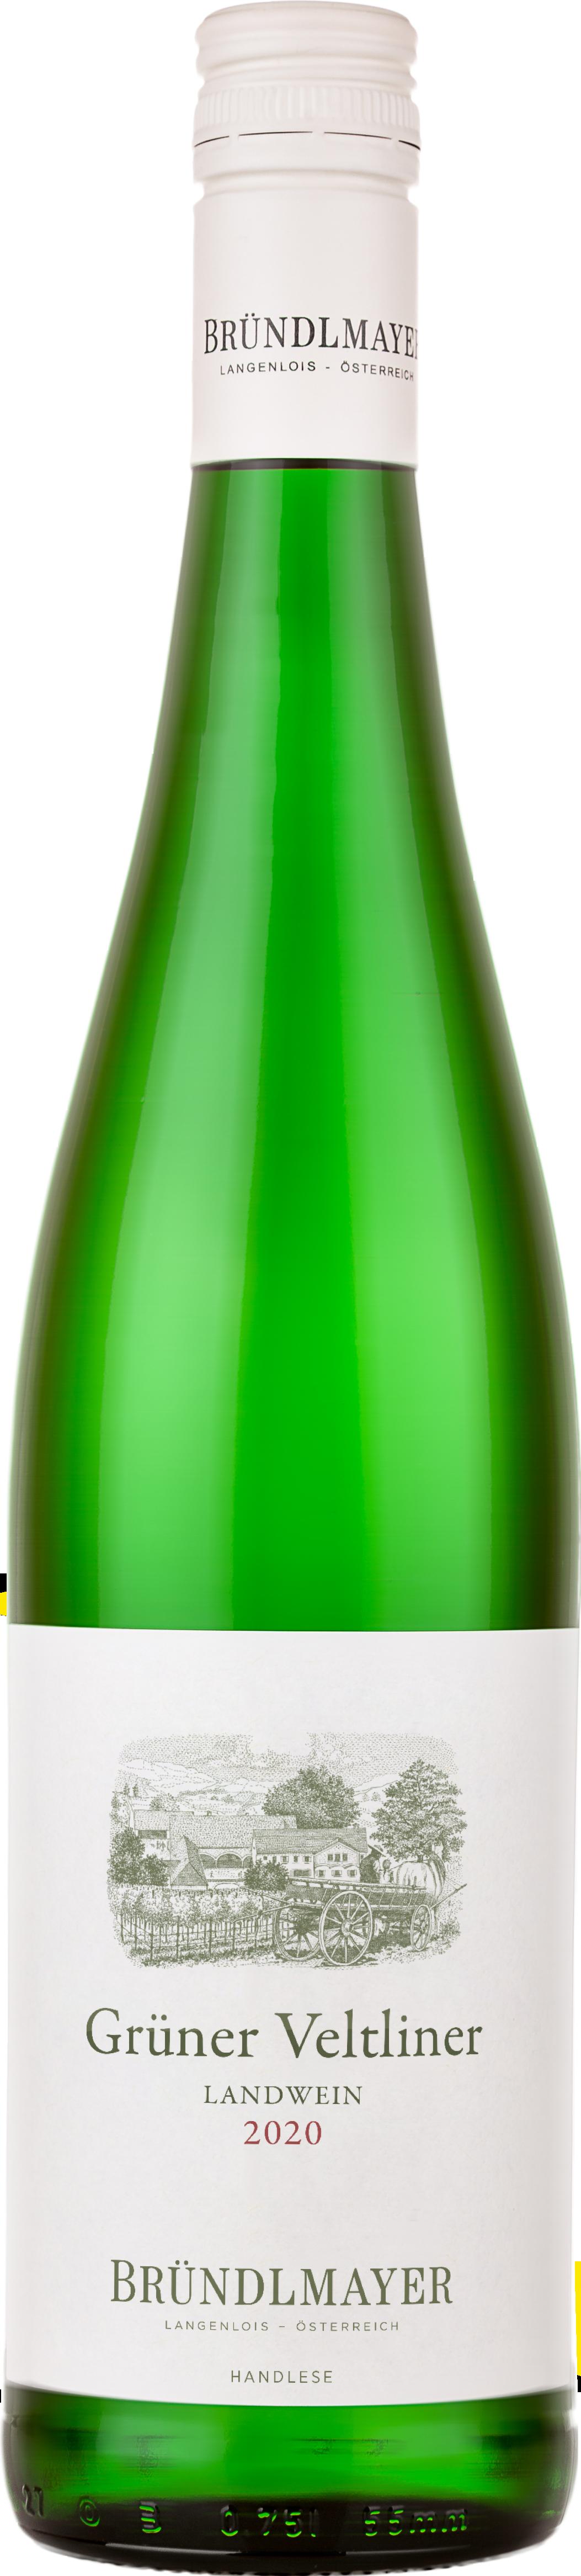  Grüner Veltliner Landwein